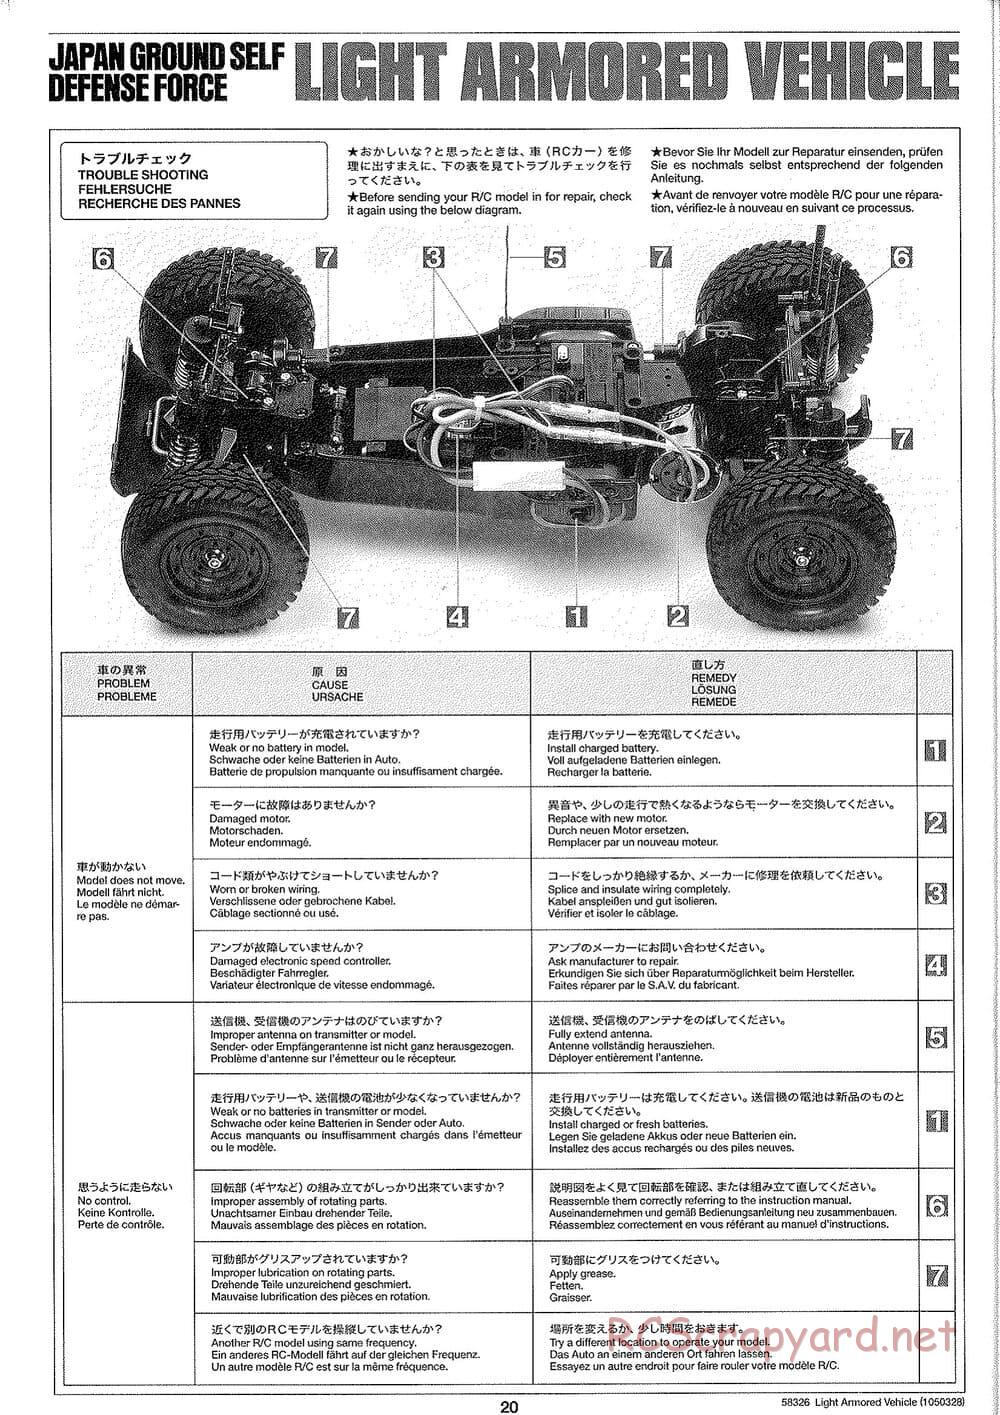 Tamiya - JGSDF Light Armored Vehicle - TA-01 Chassis - Manual - Page 20